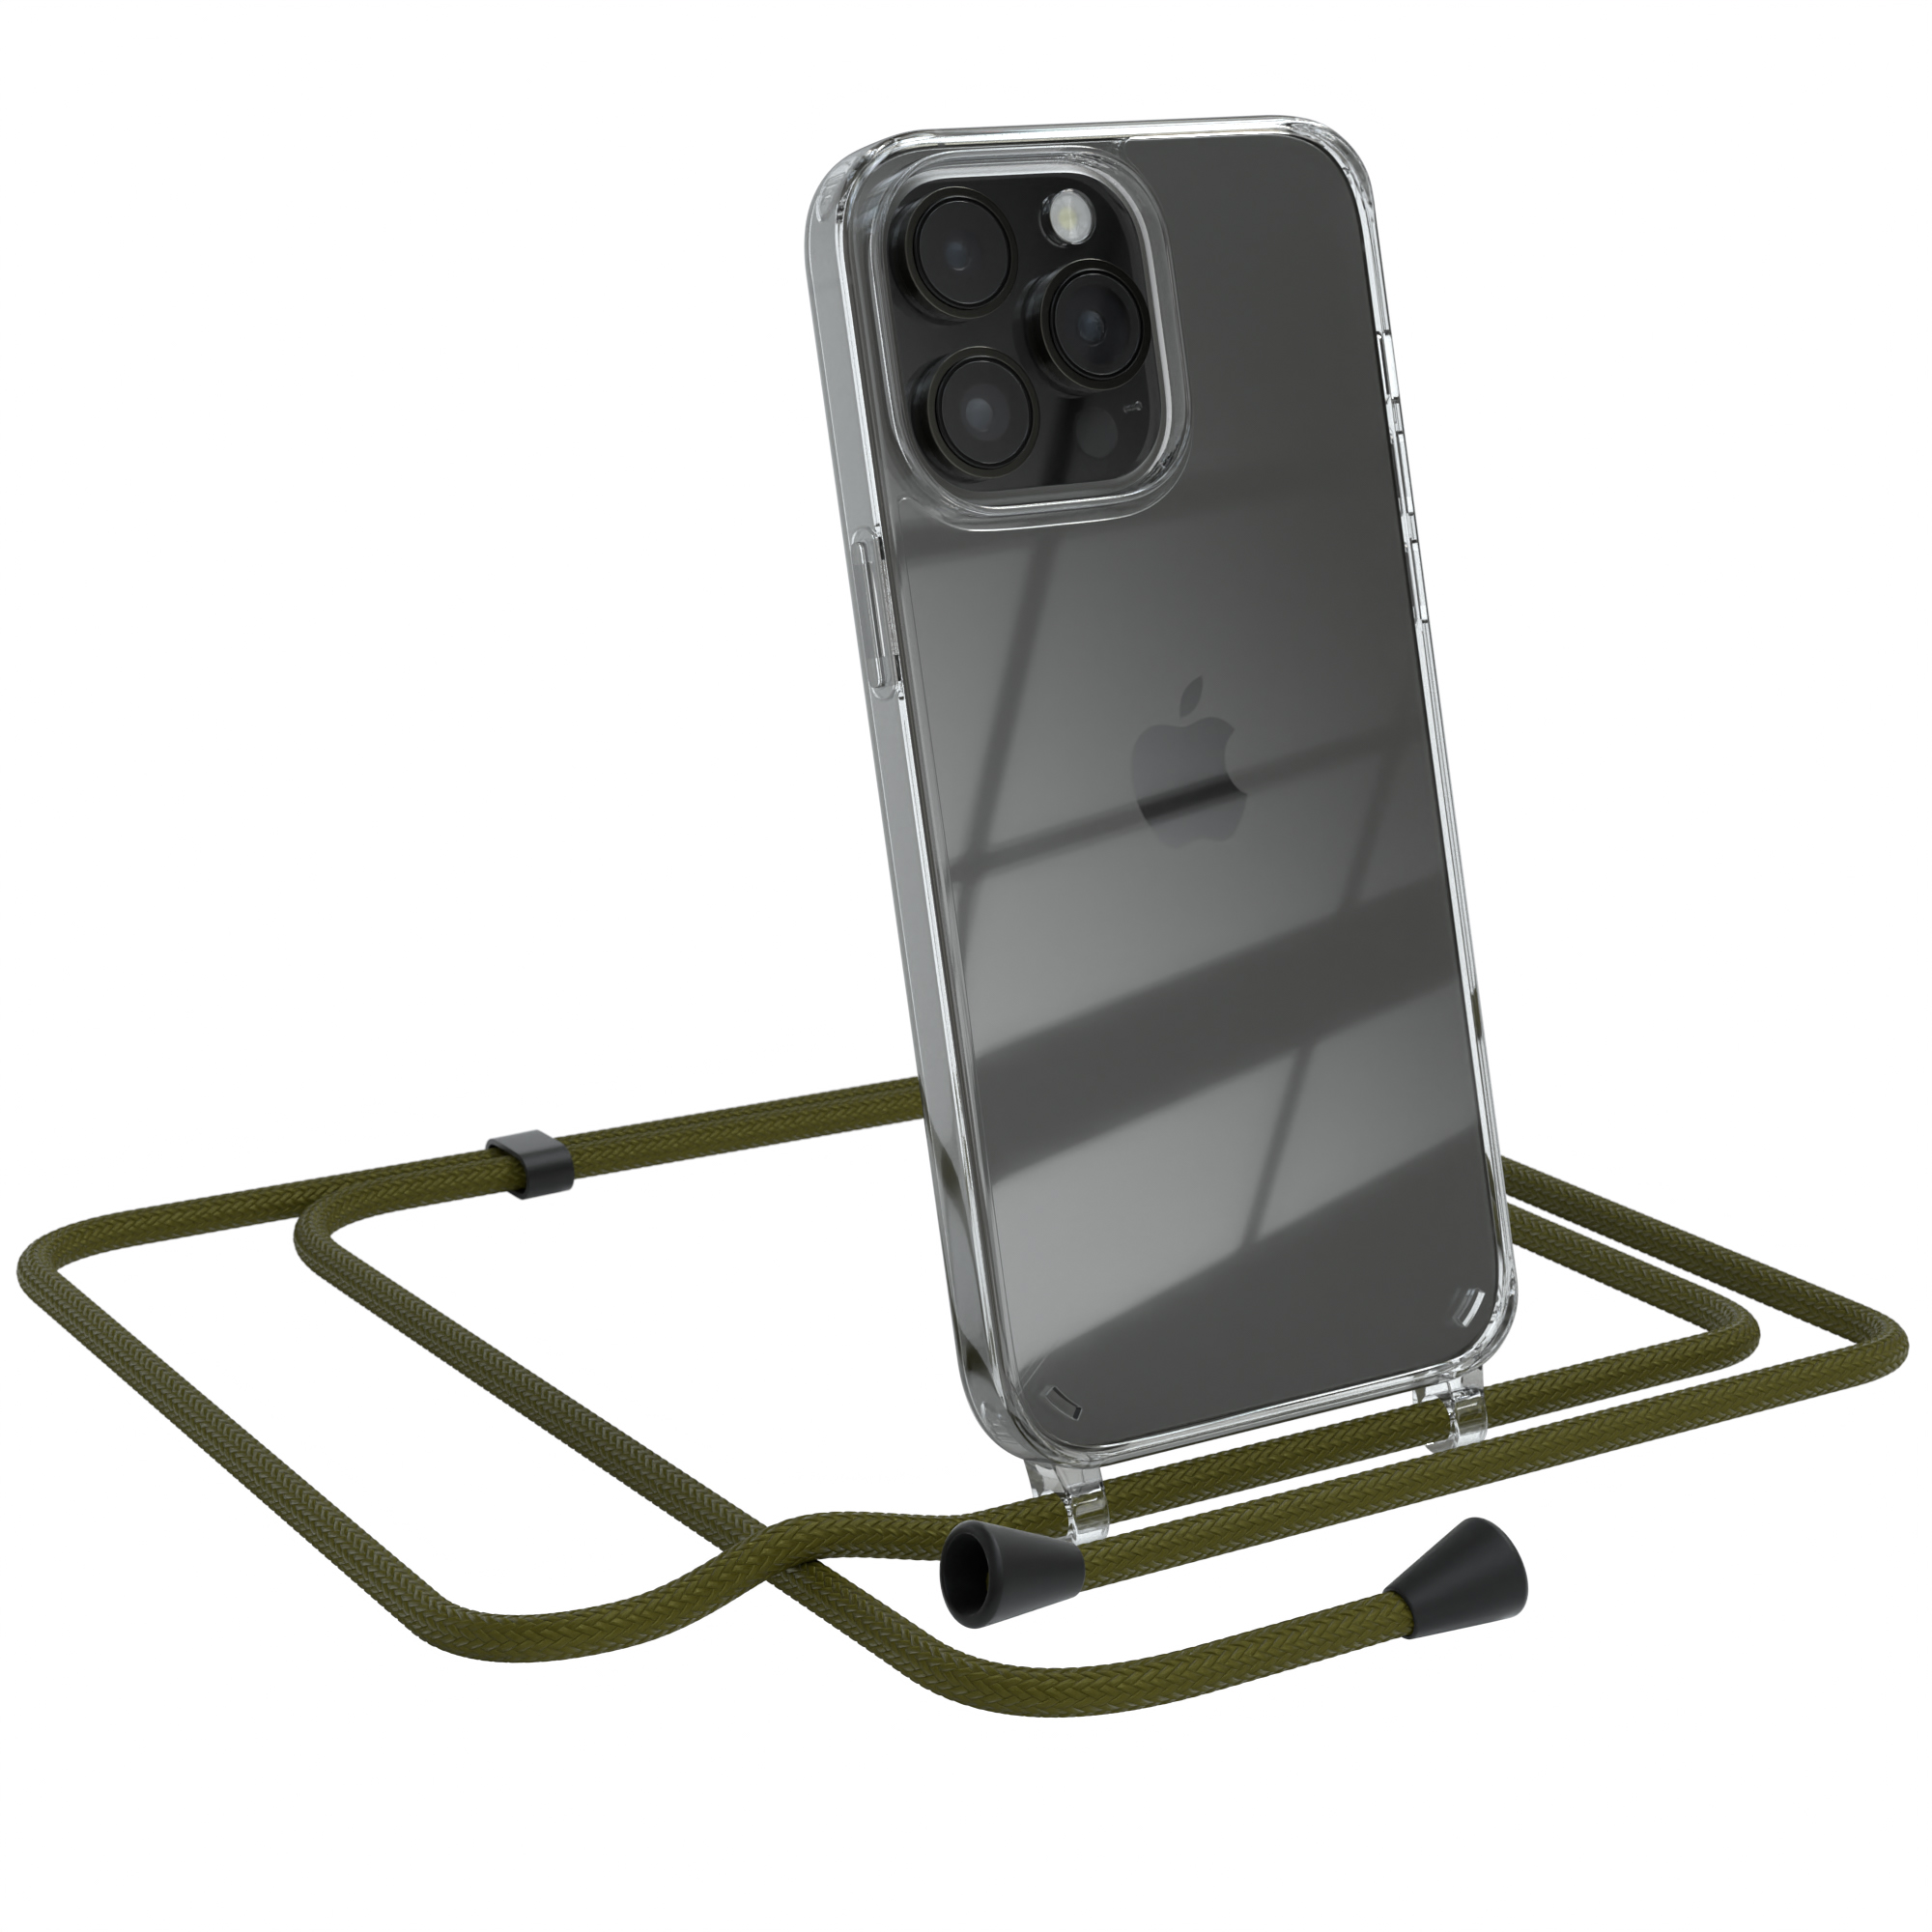 EAZY CASE Clear Cover mit Olive Grün Umhängetasche, Apple, iPhone Max, 14 Pro Umhängeband